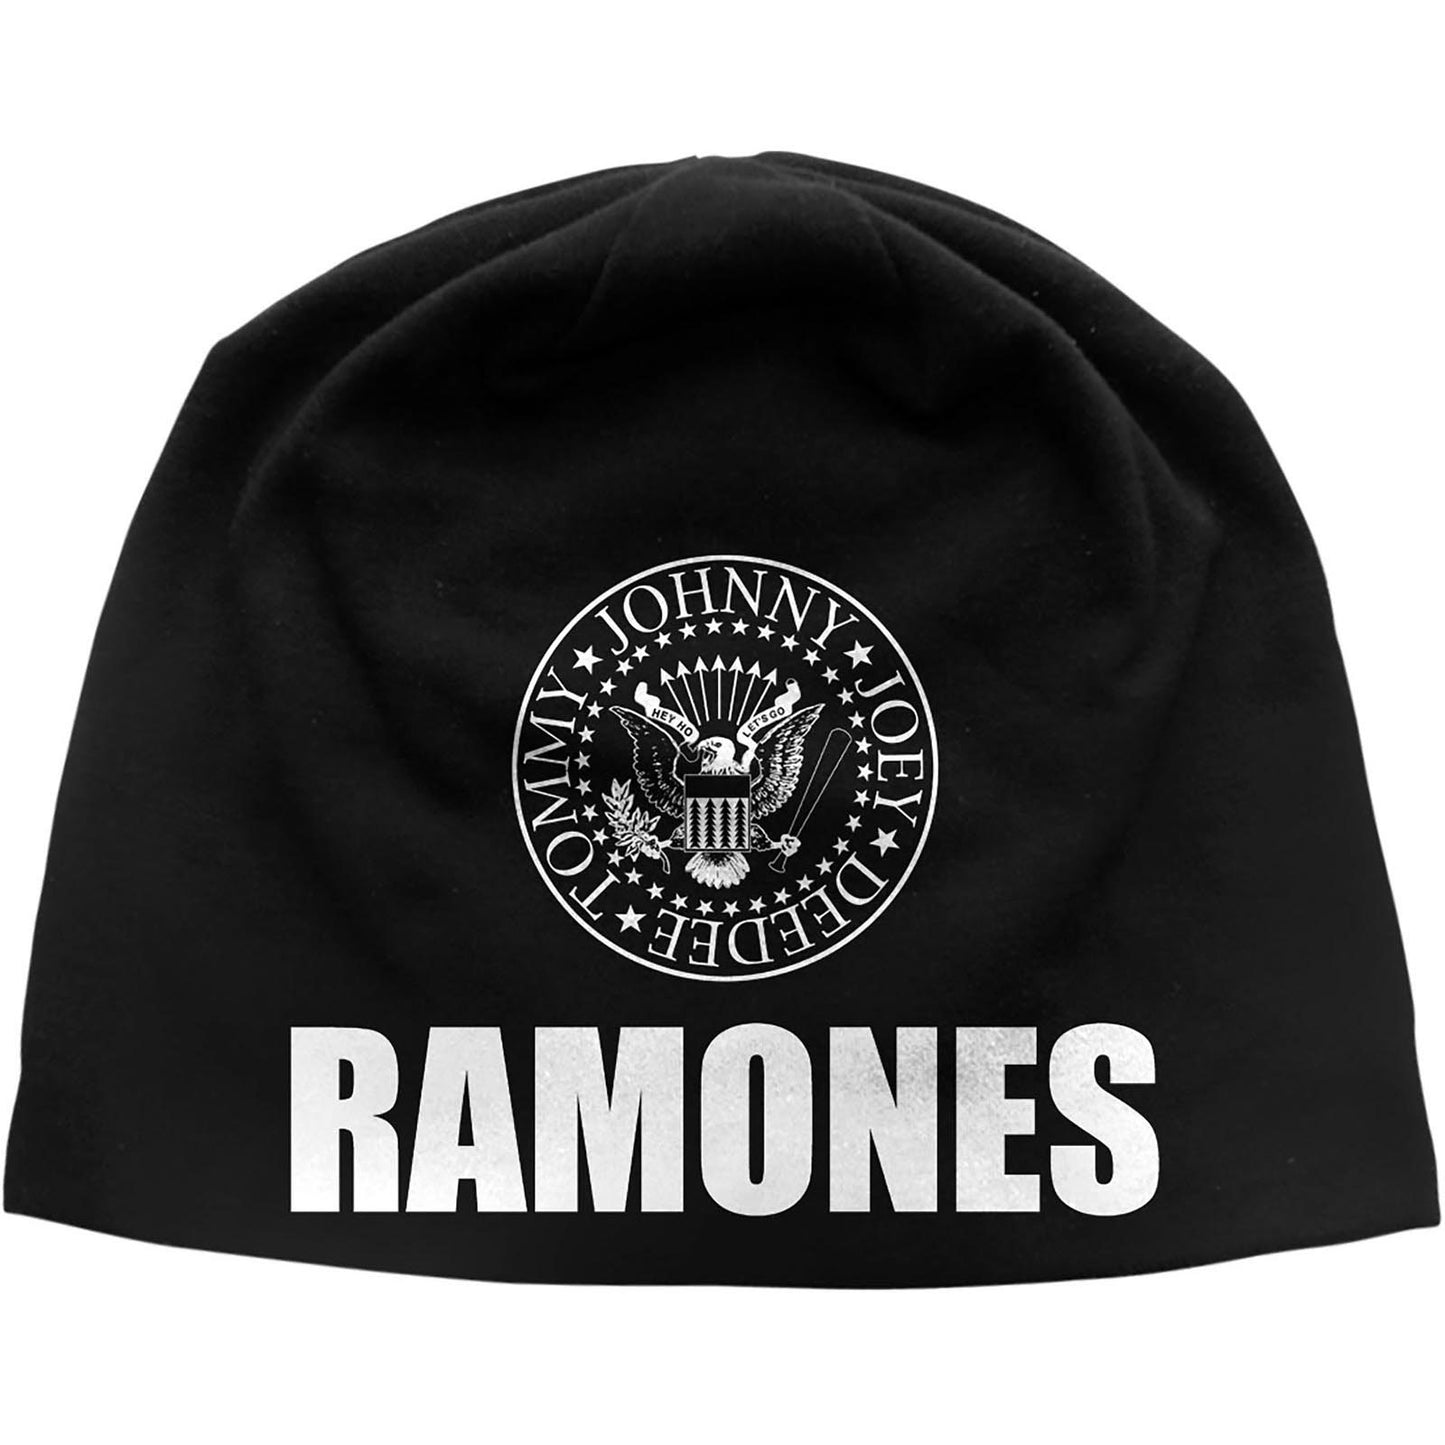 Ramones Unisex Beanie Hat: Classic Seal